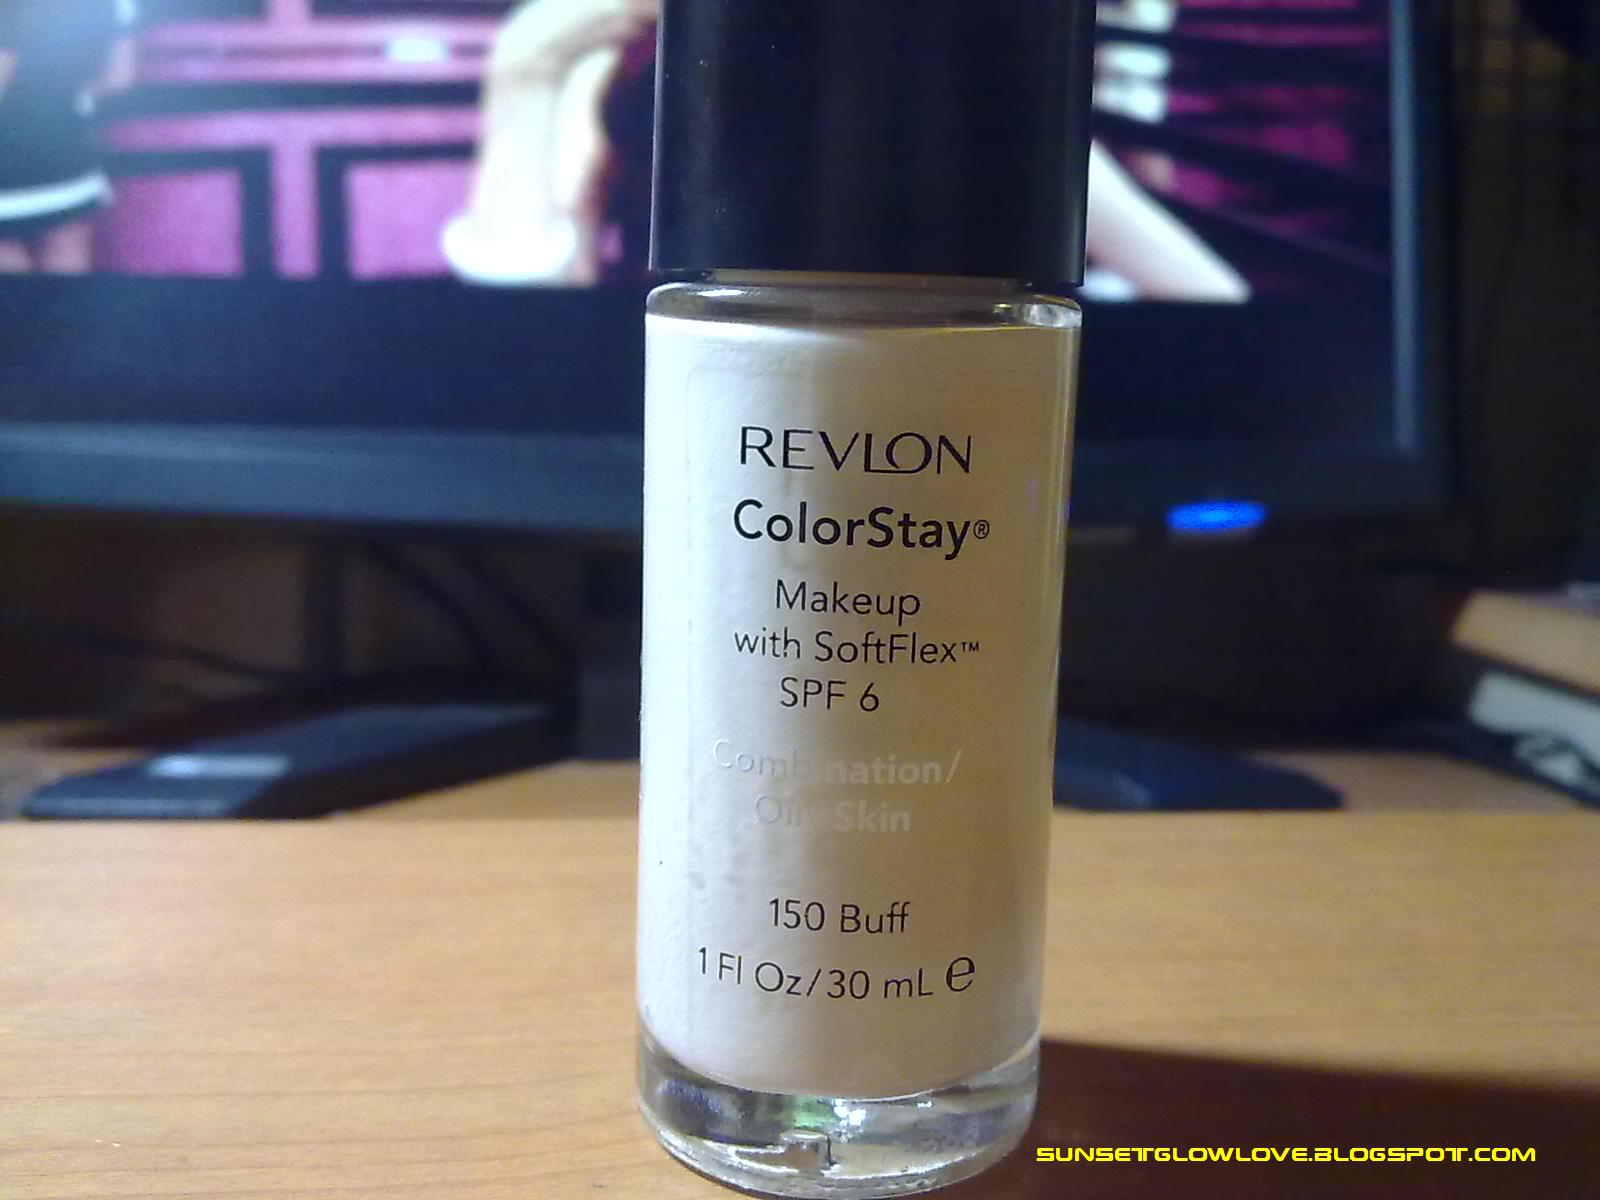 Assassin passager hjælp FIGIBANK♥: REVIEW: Revlon Colorstay Foundation - Combination/Oily Skin